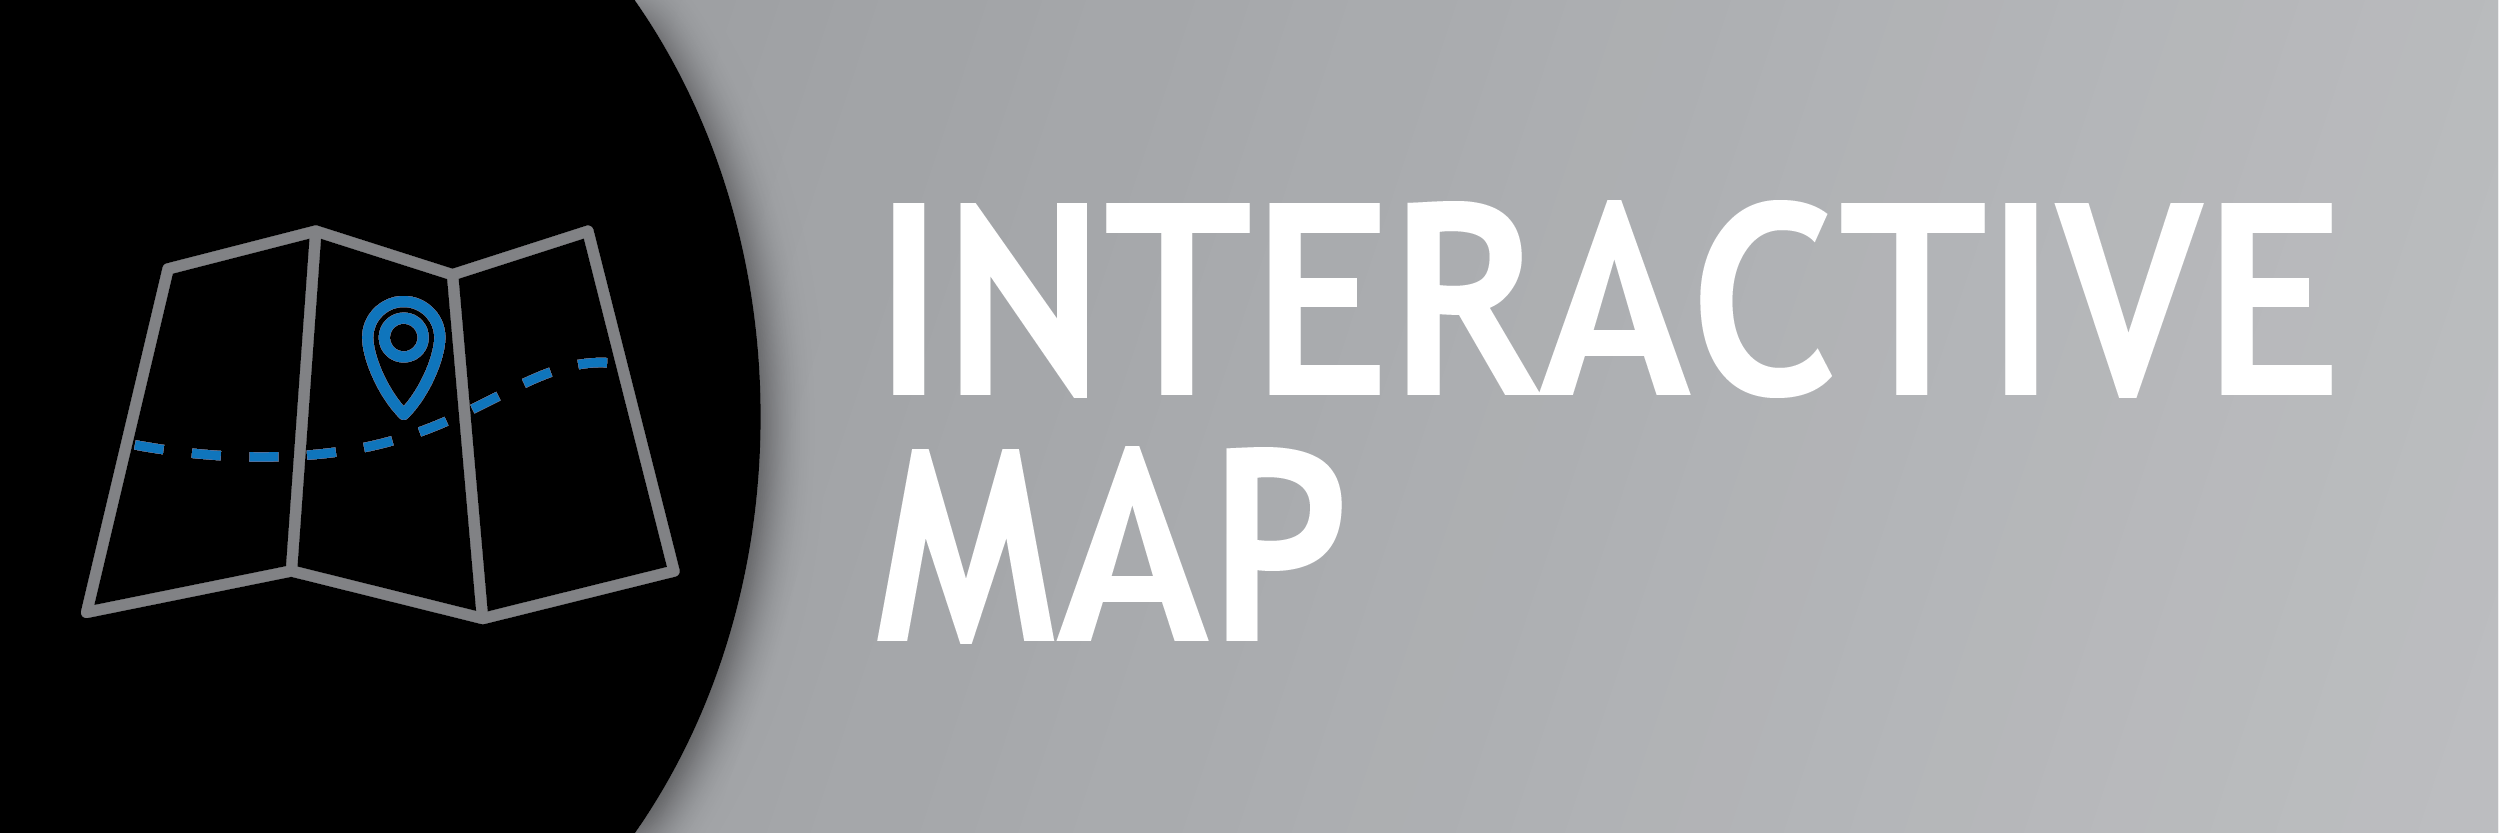 Interactive map button